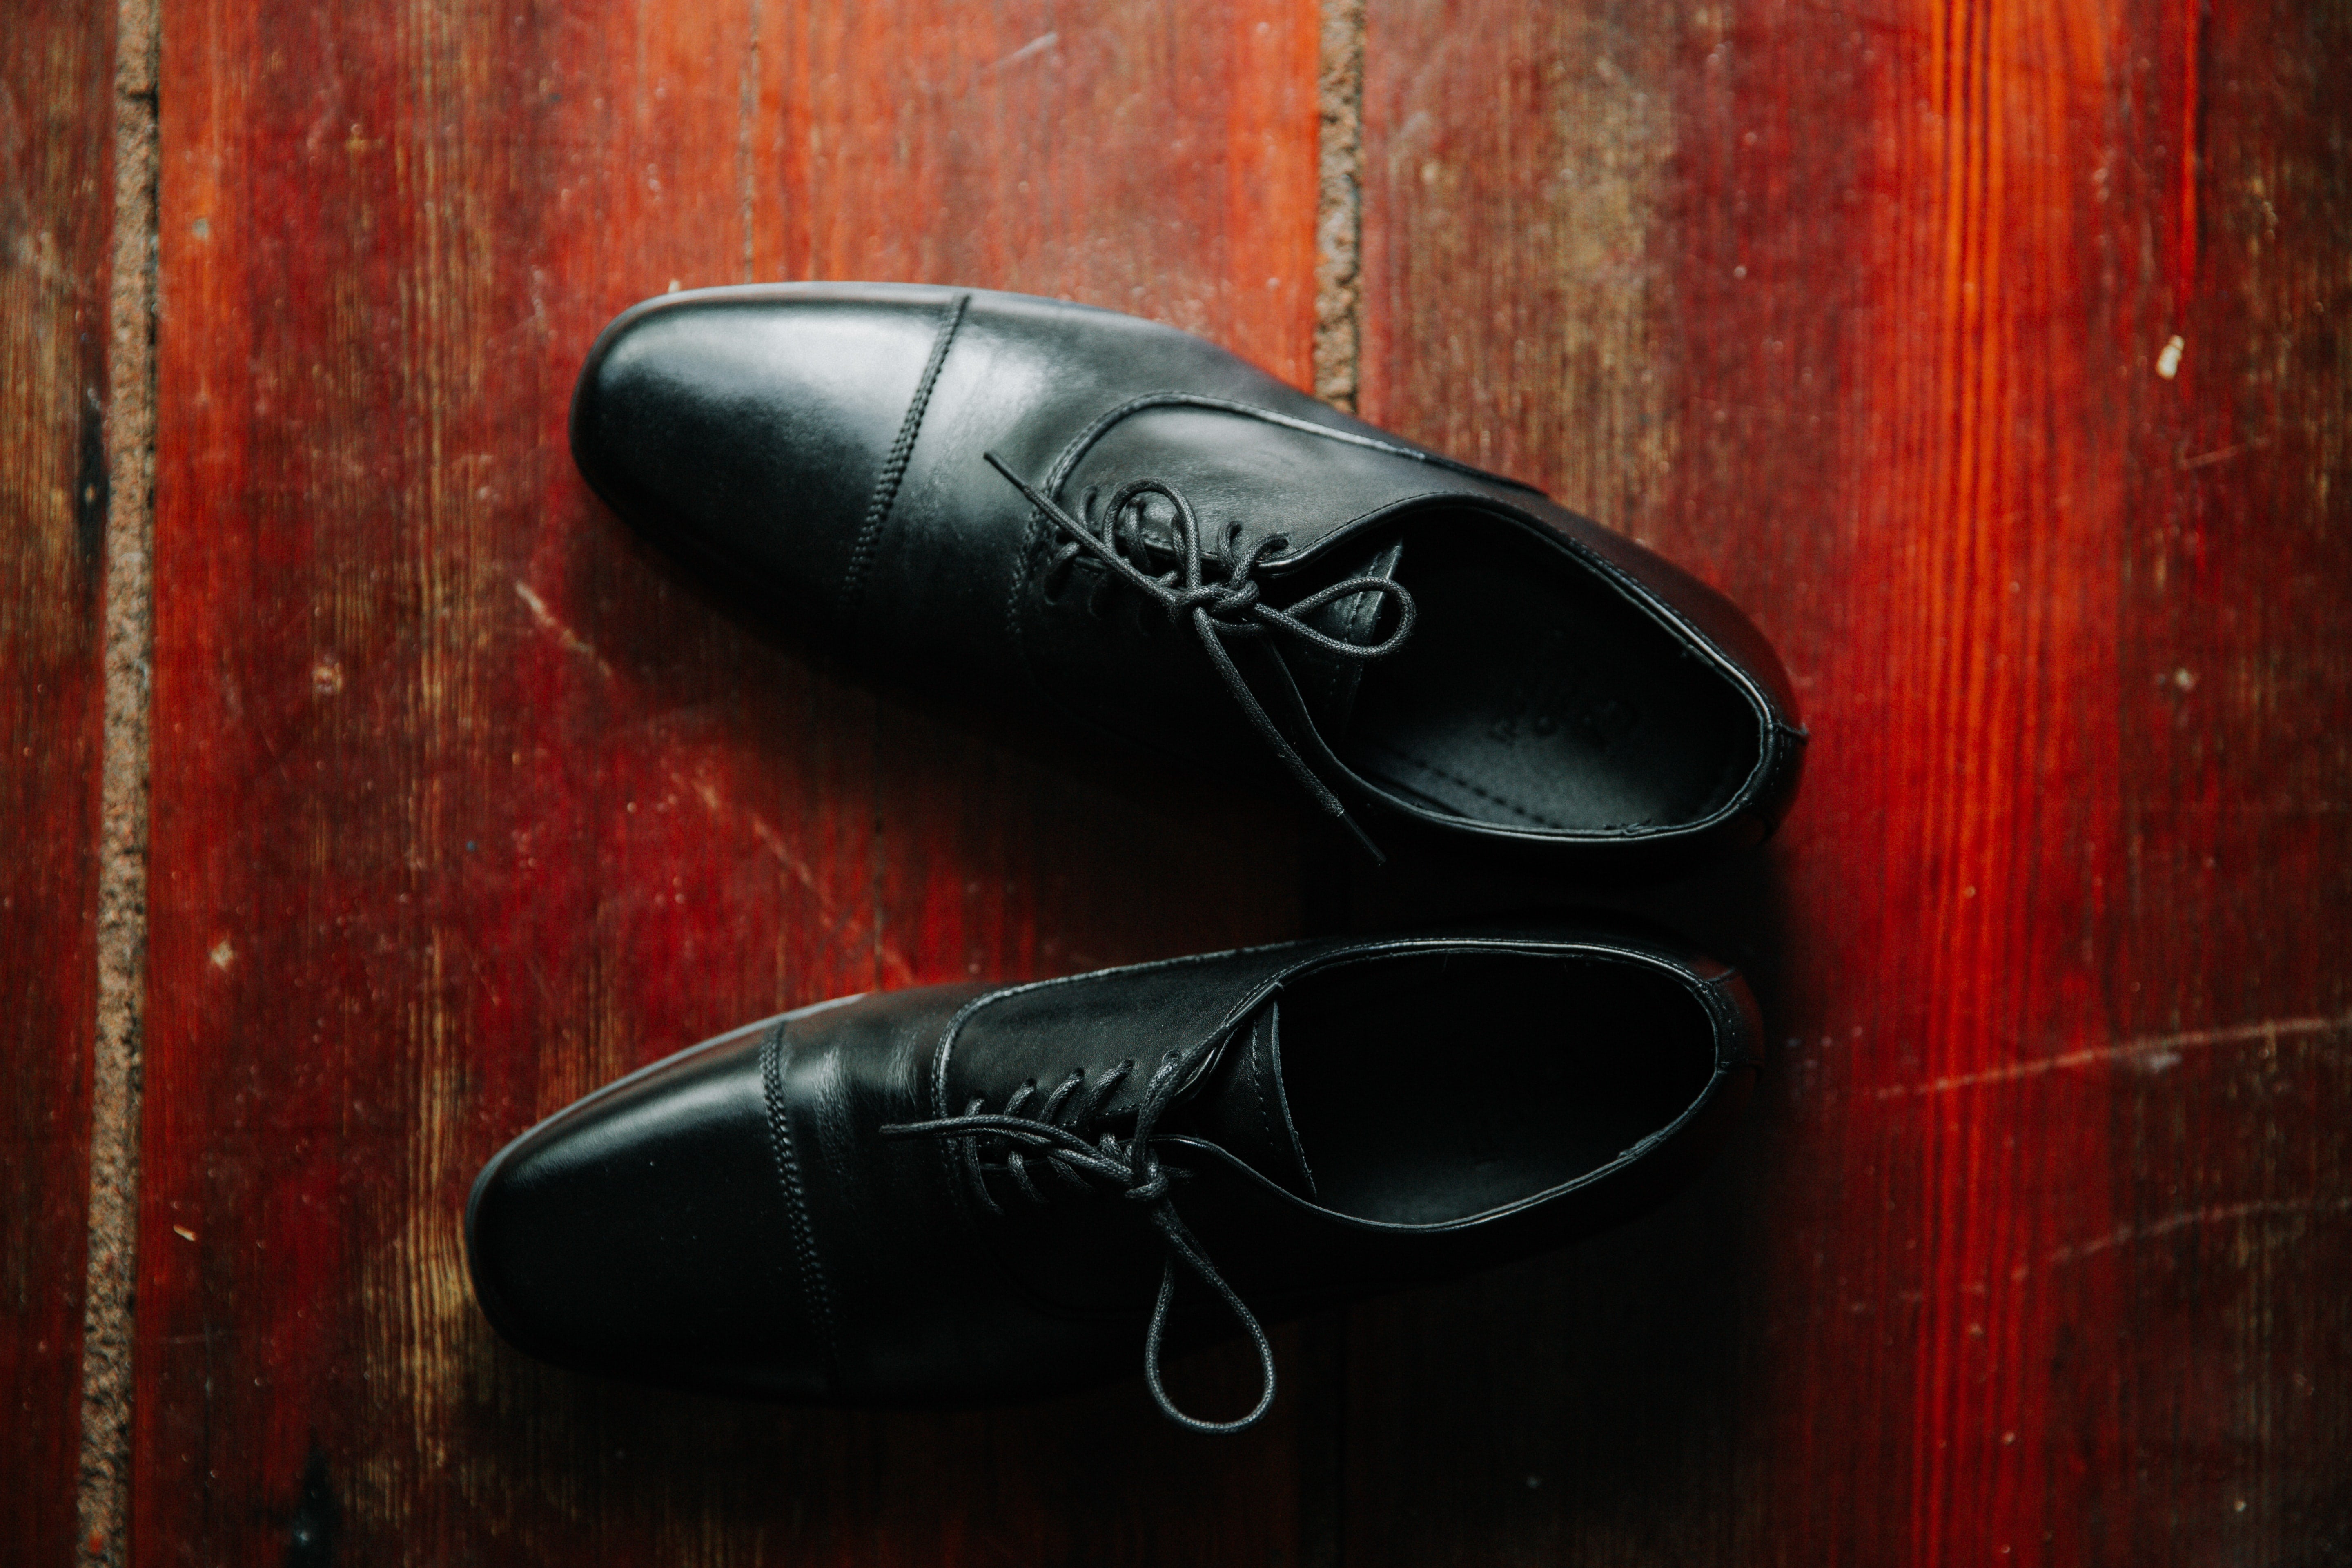 black Oxford shoes on reddish brown wooden floor